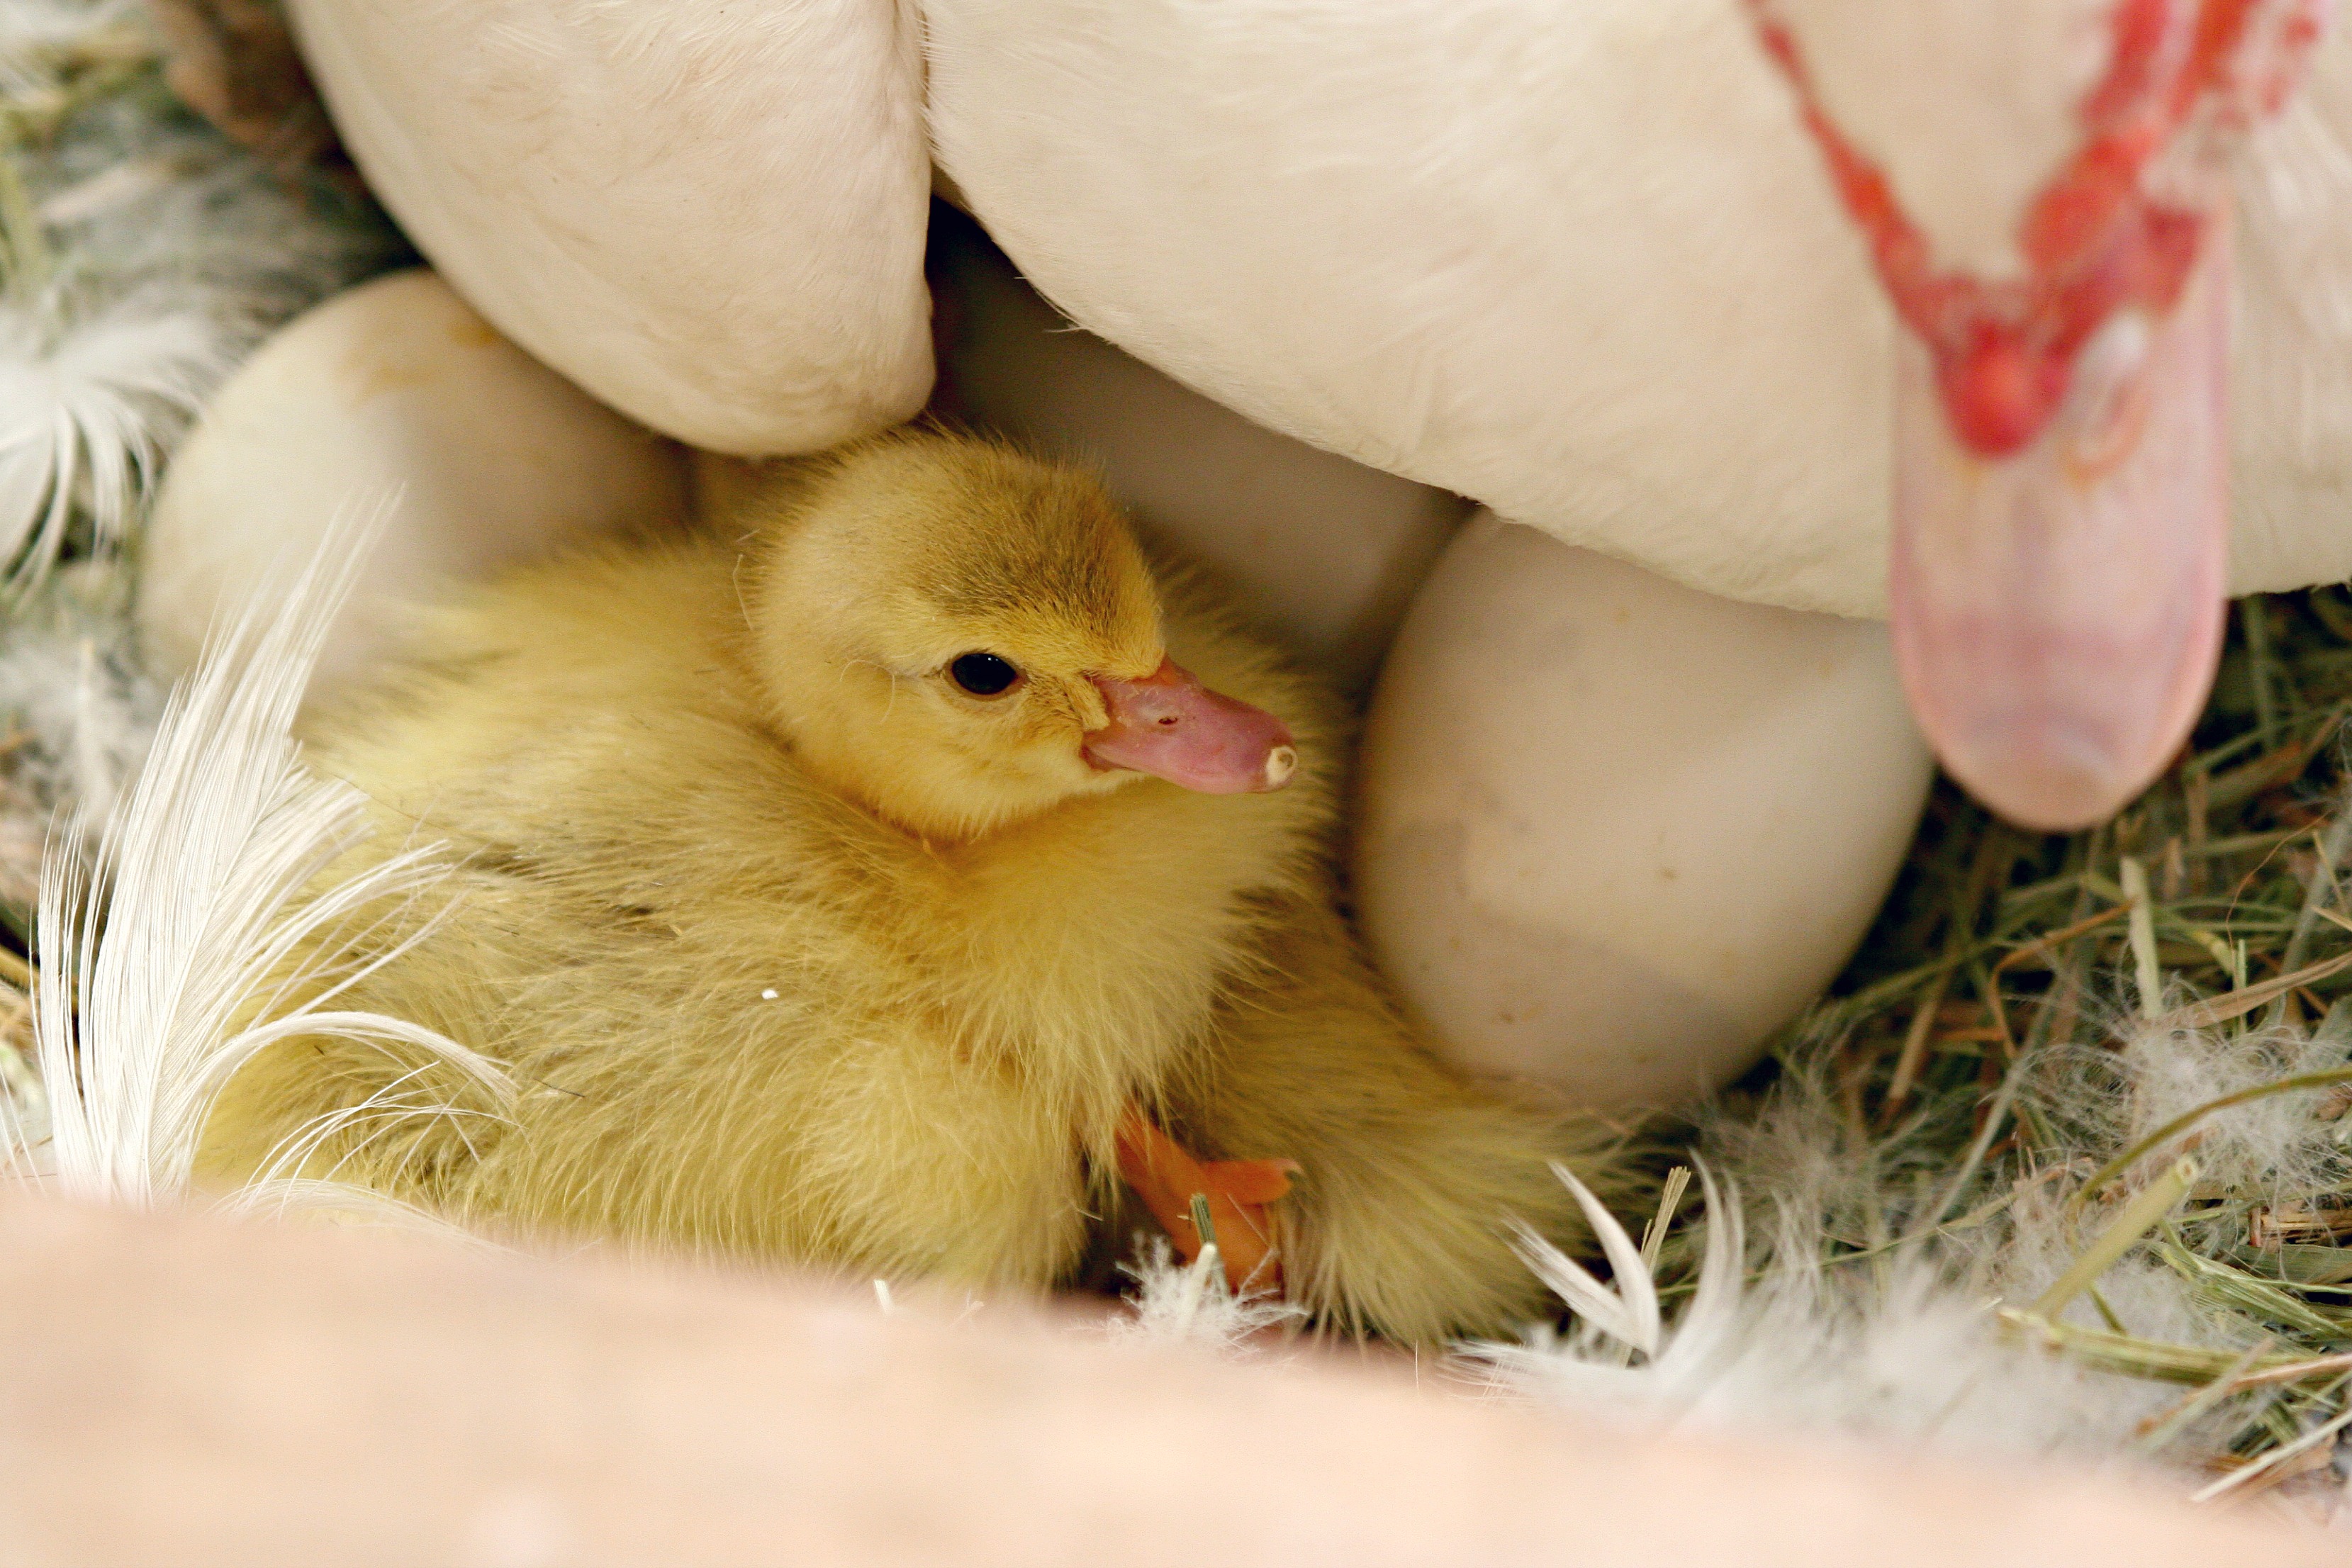 We love little baby ducks | Morning Bray Farm